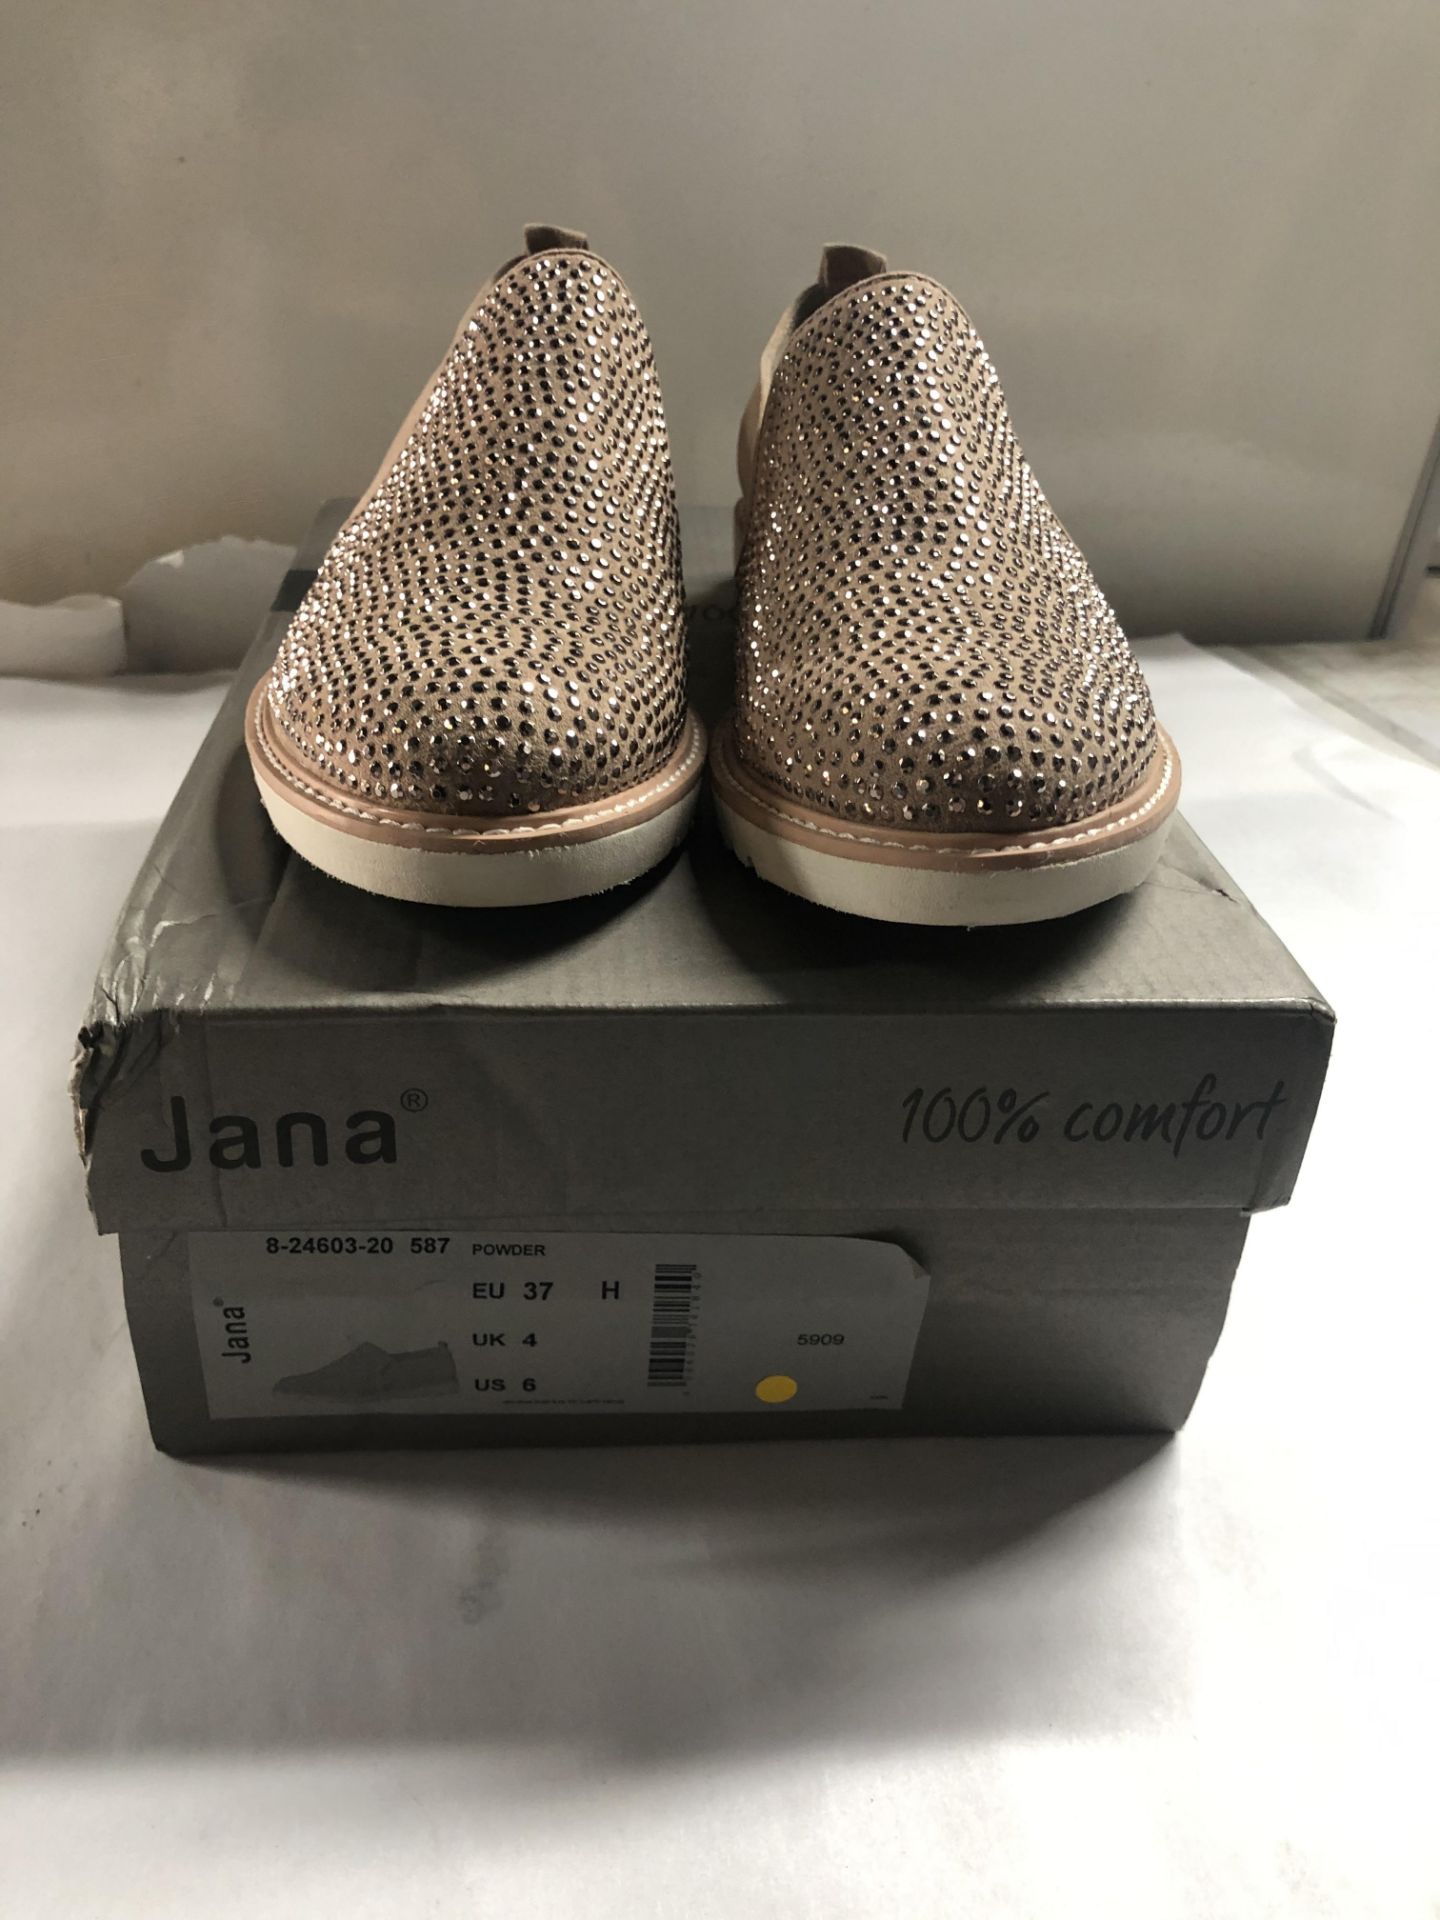 Jana Casual Shoes - Image 2 of 3